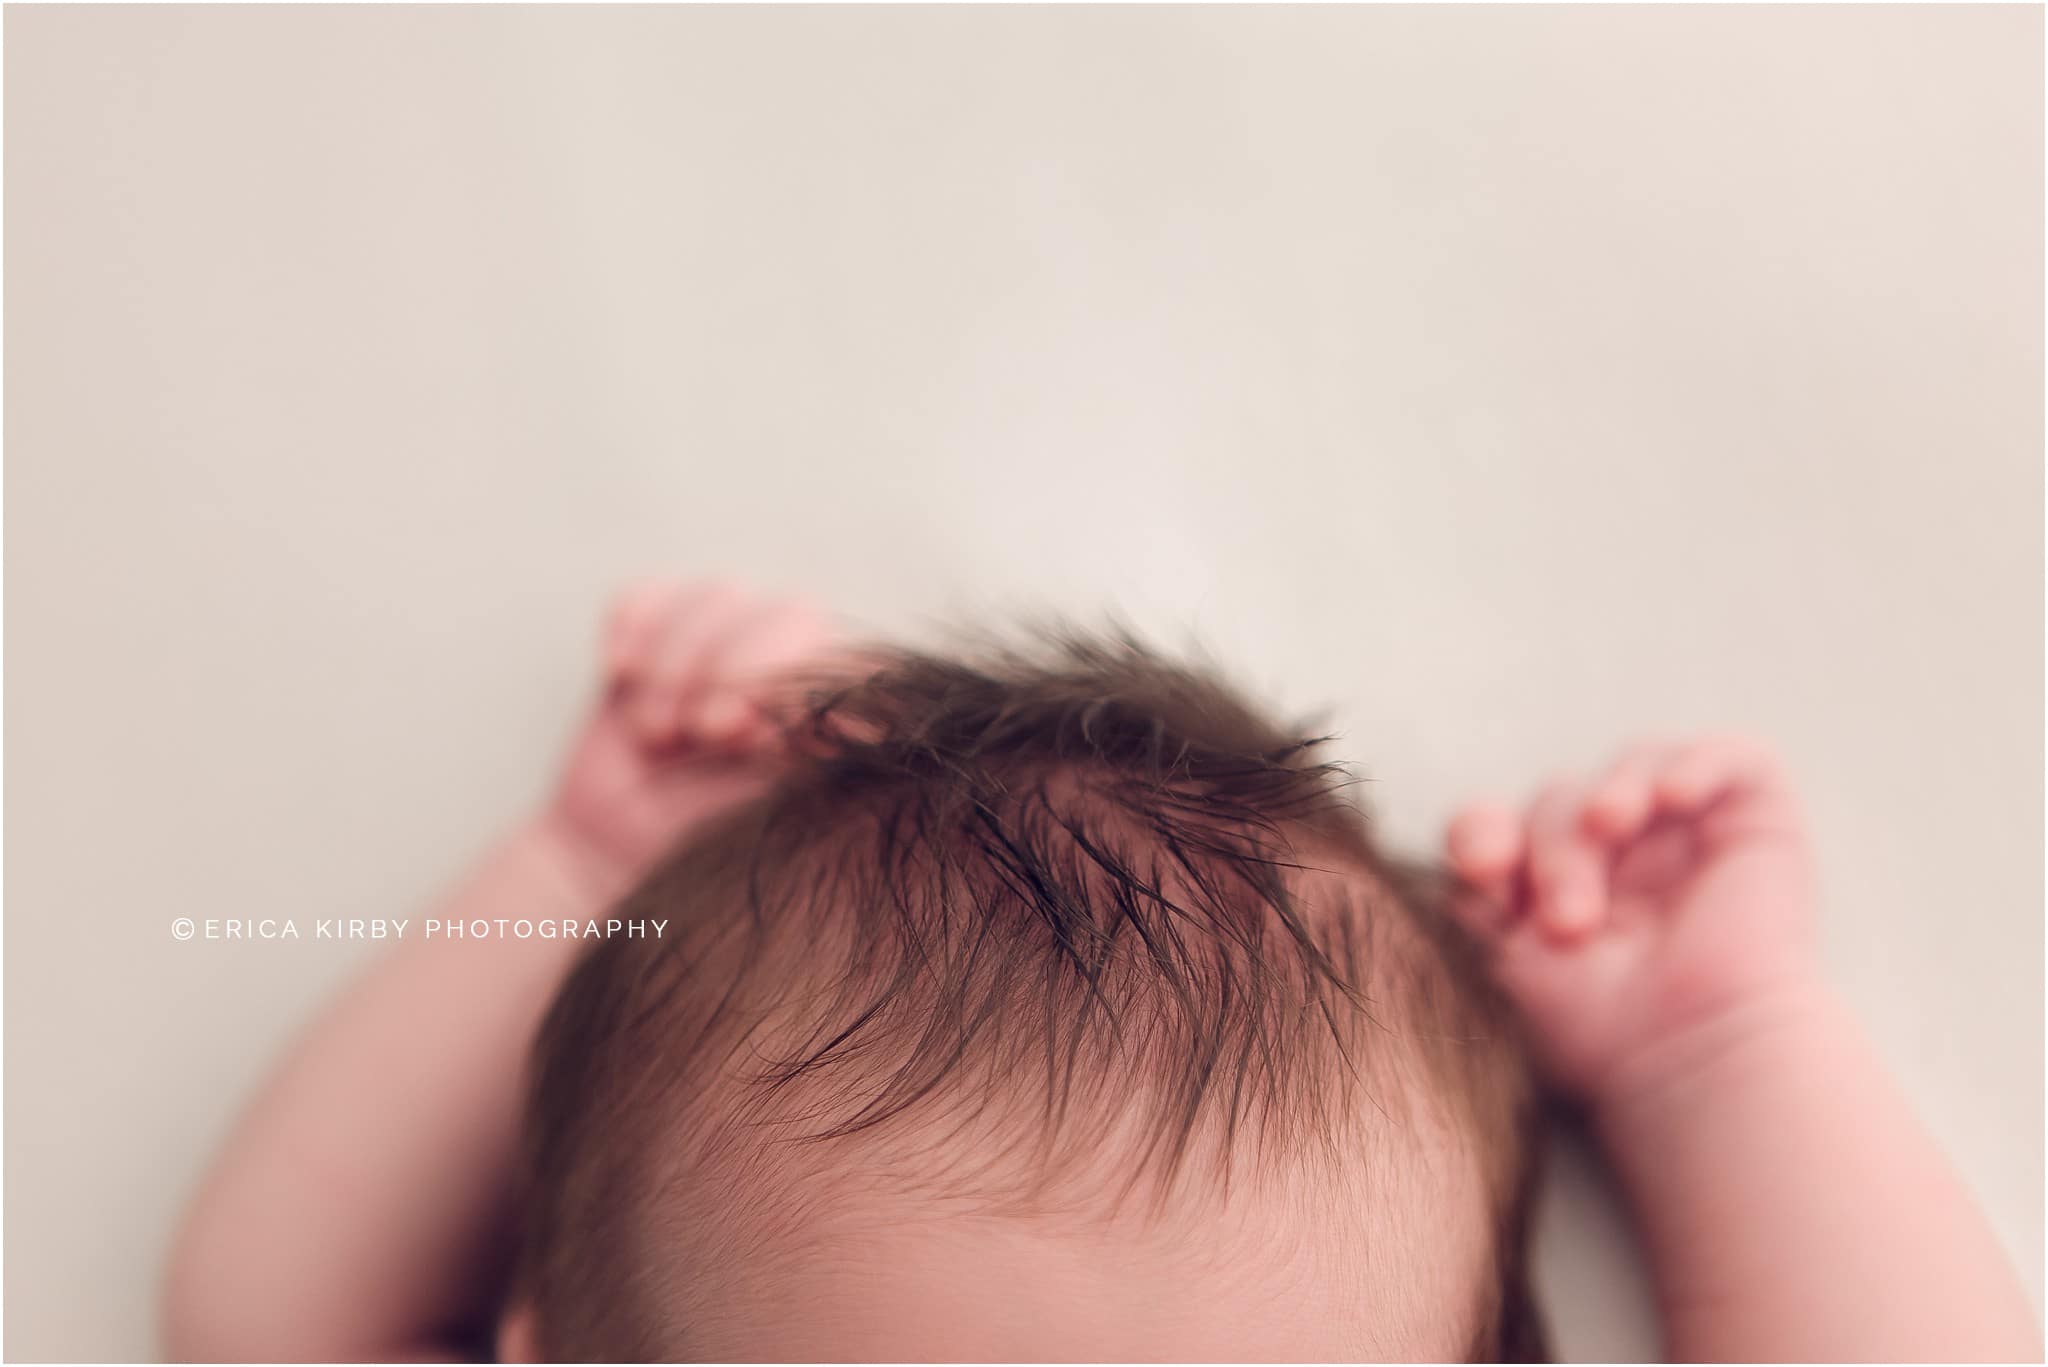 Newborn Photography NWA | Baby boy newborn photography session in Bentonville Arkansas | baby on cream background unposed